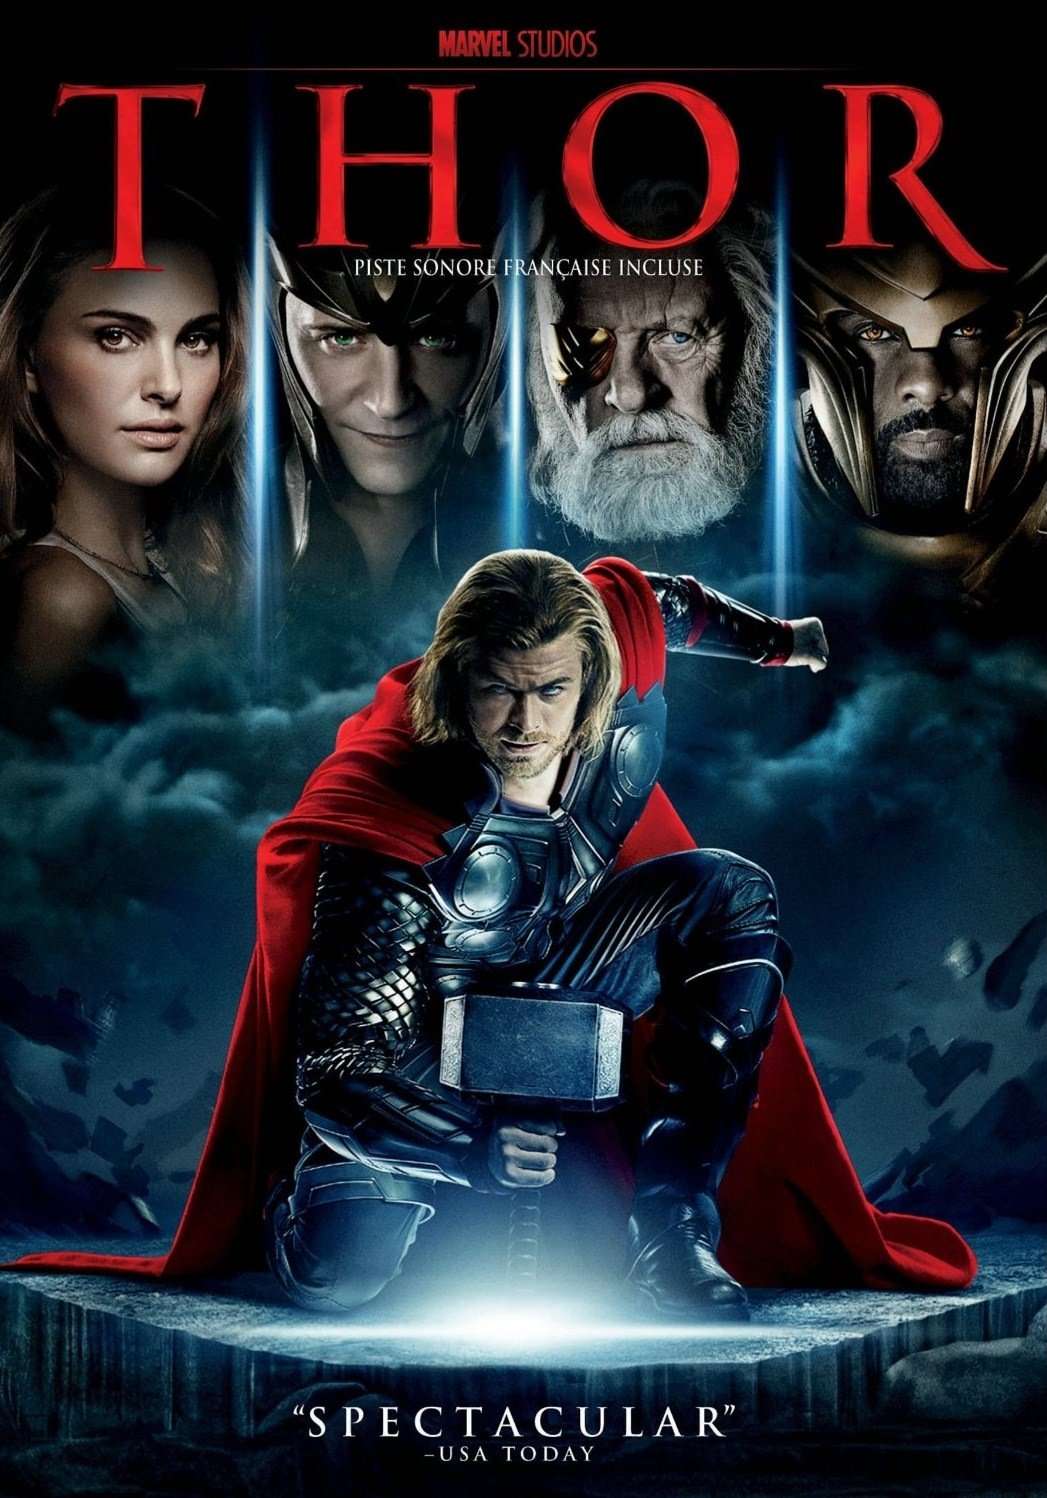 Thor first movie